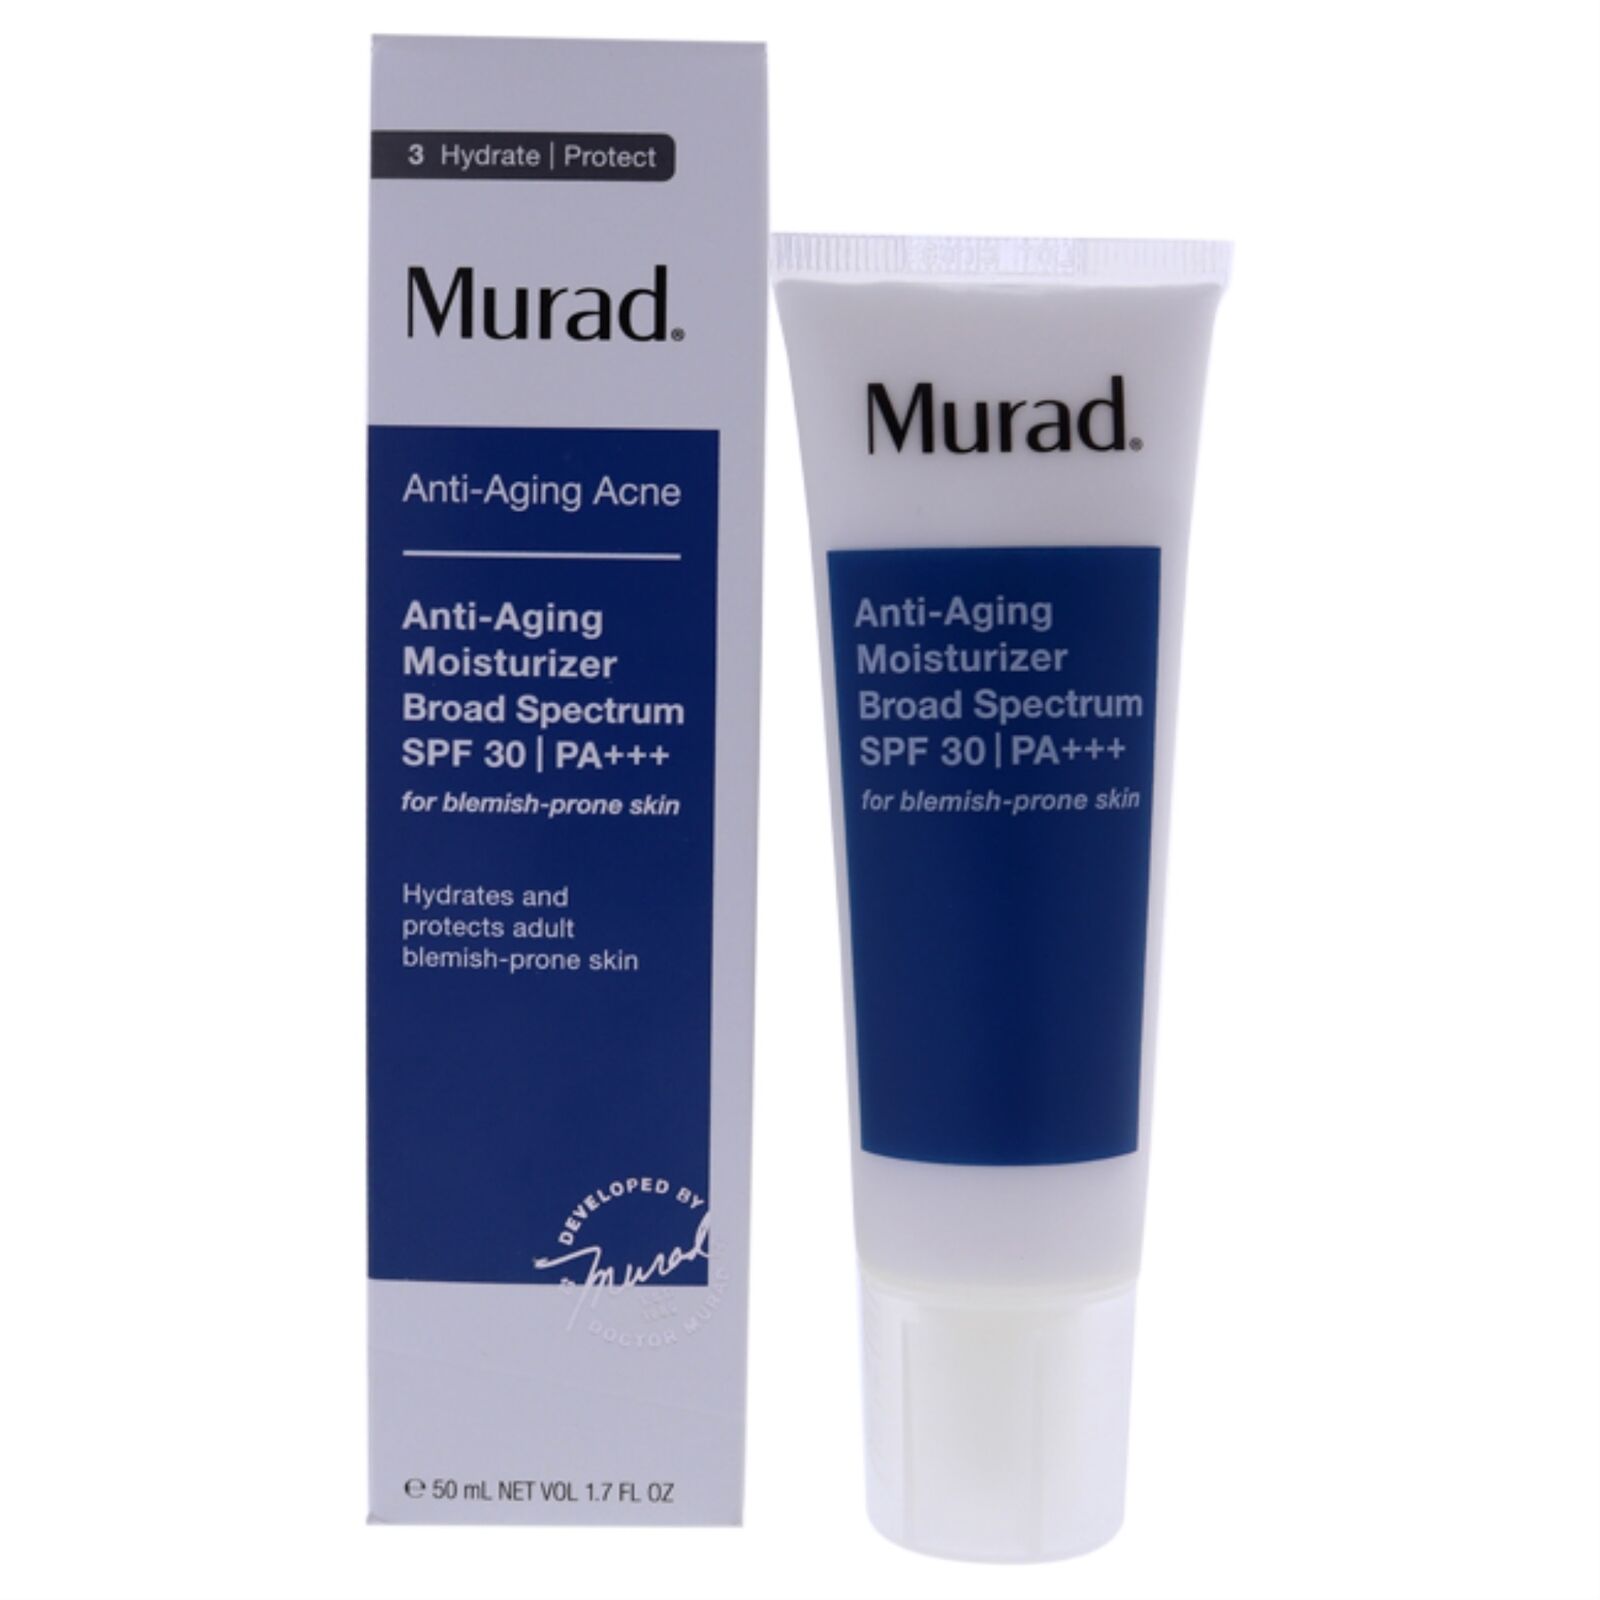 murad anti aging moisturizer spf 30 pa